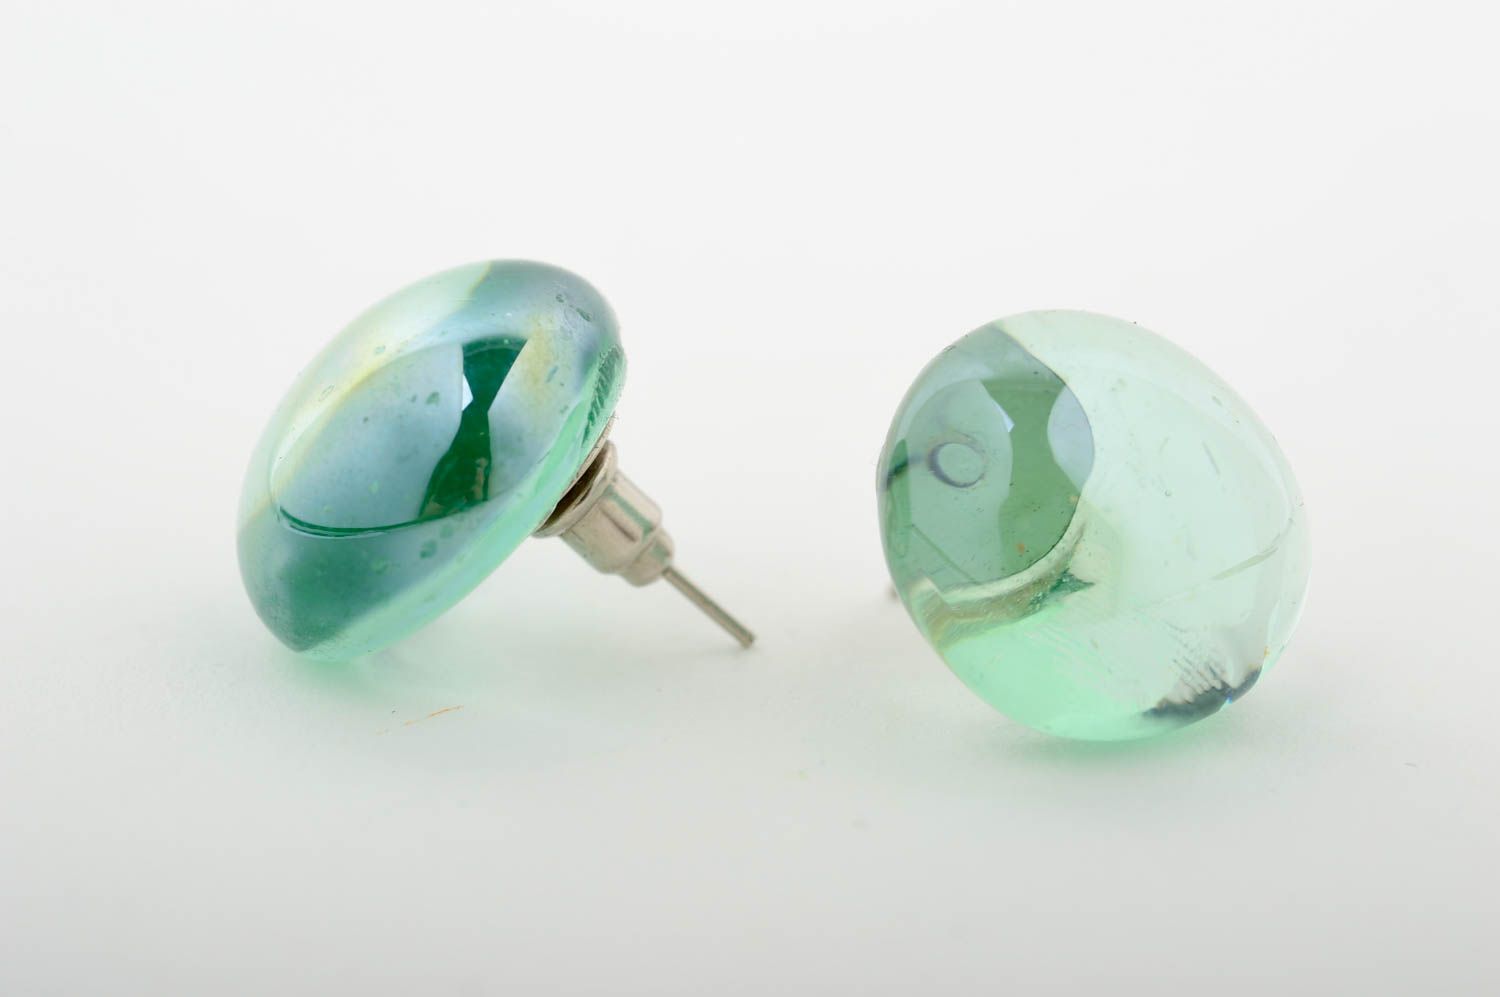 Unusual handmade glass earrings stud earrings glass art accessories for girls photo 3